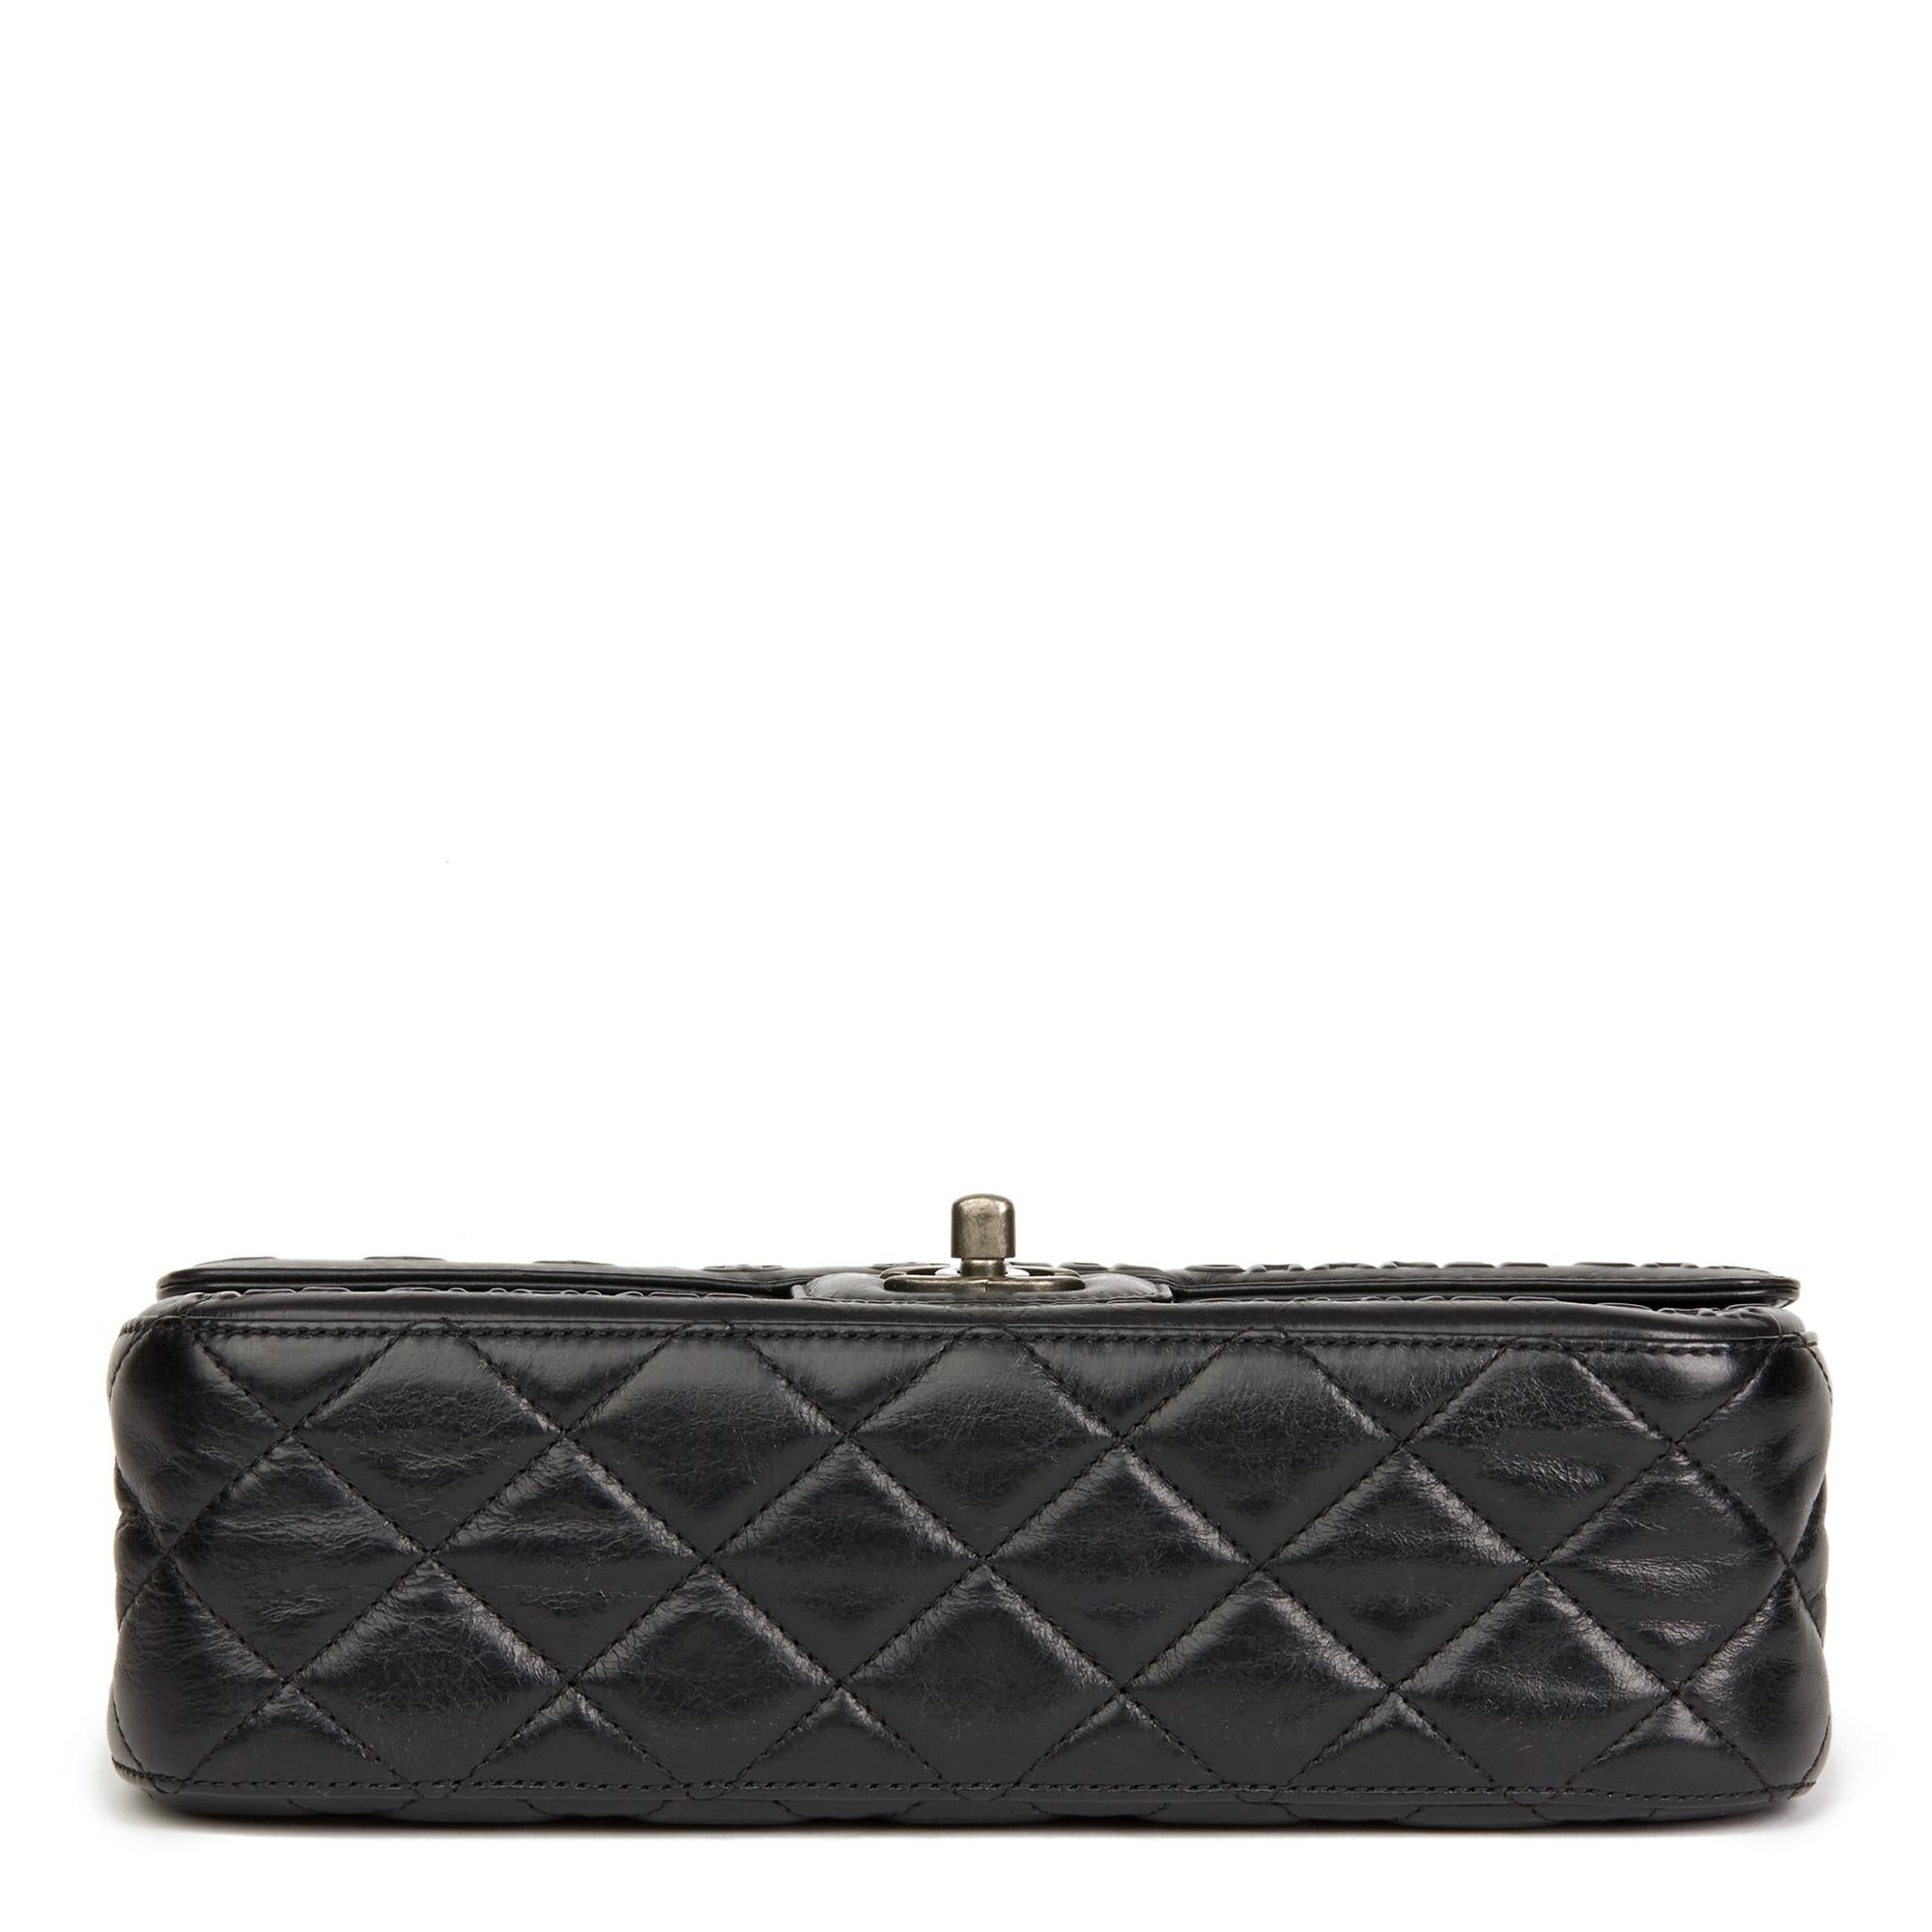 2014 Chanel Black Embossed Calfskin Leather Paris-Dallas Classic Single Flap Bag 1